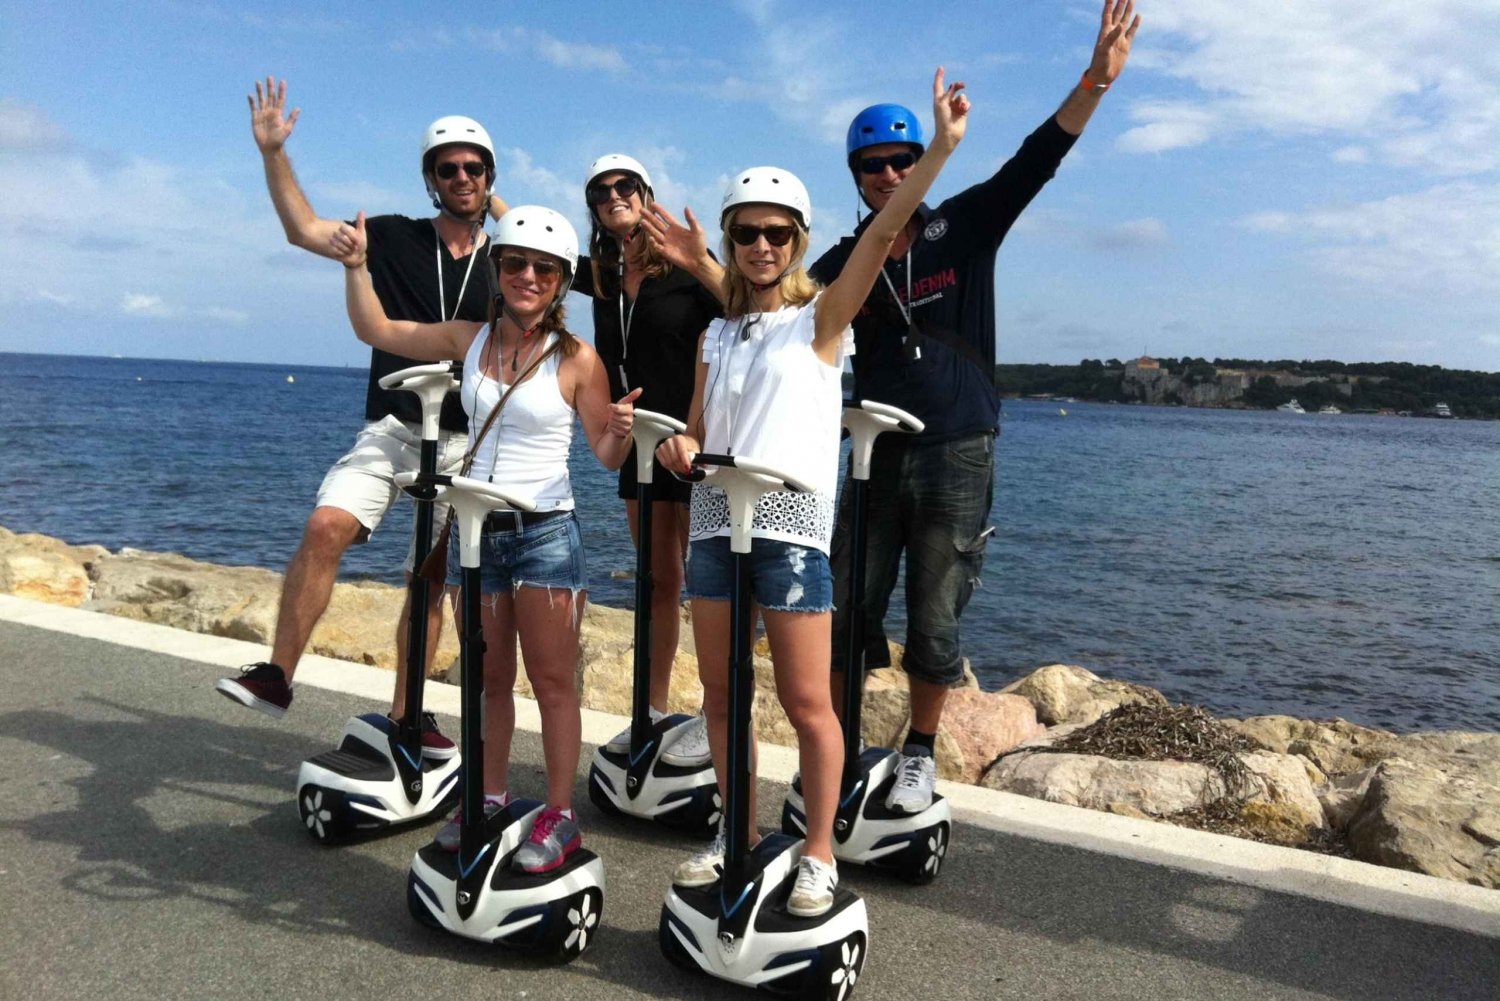 Cannes: Gyropod-tour van 1 of 2 uur